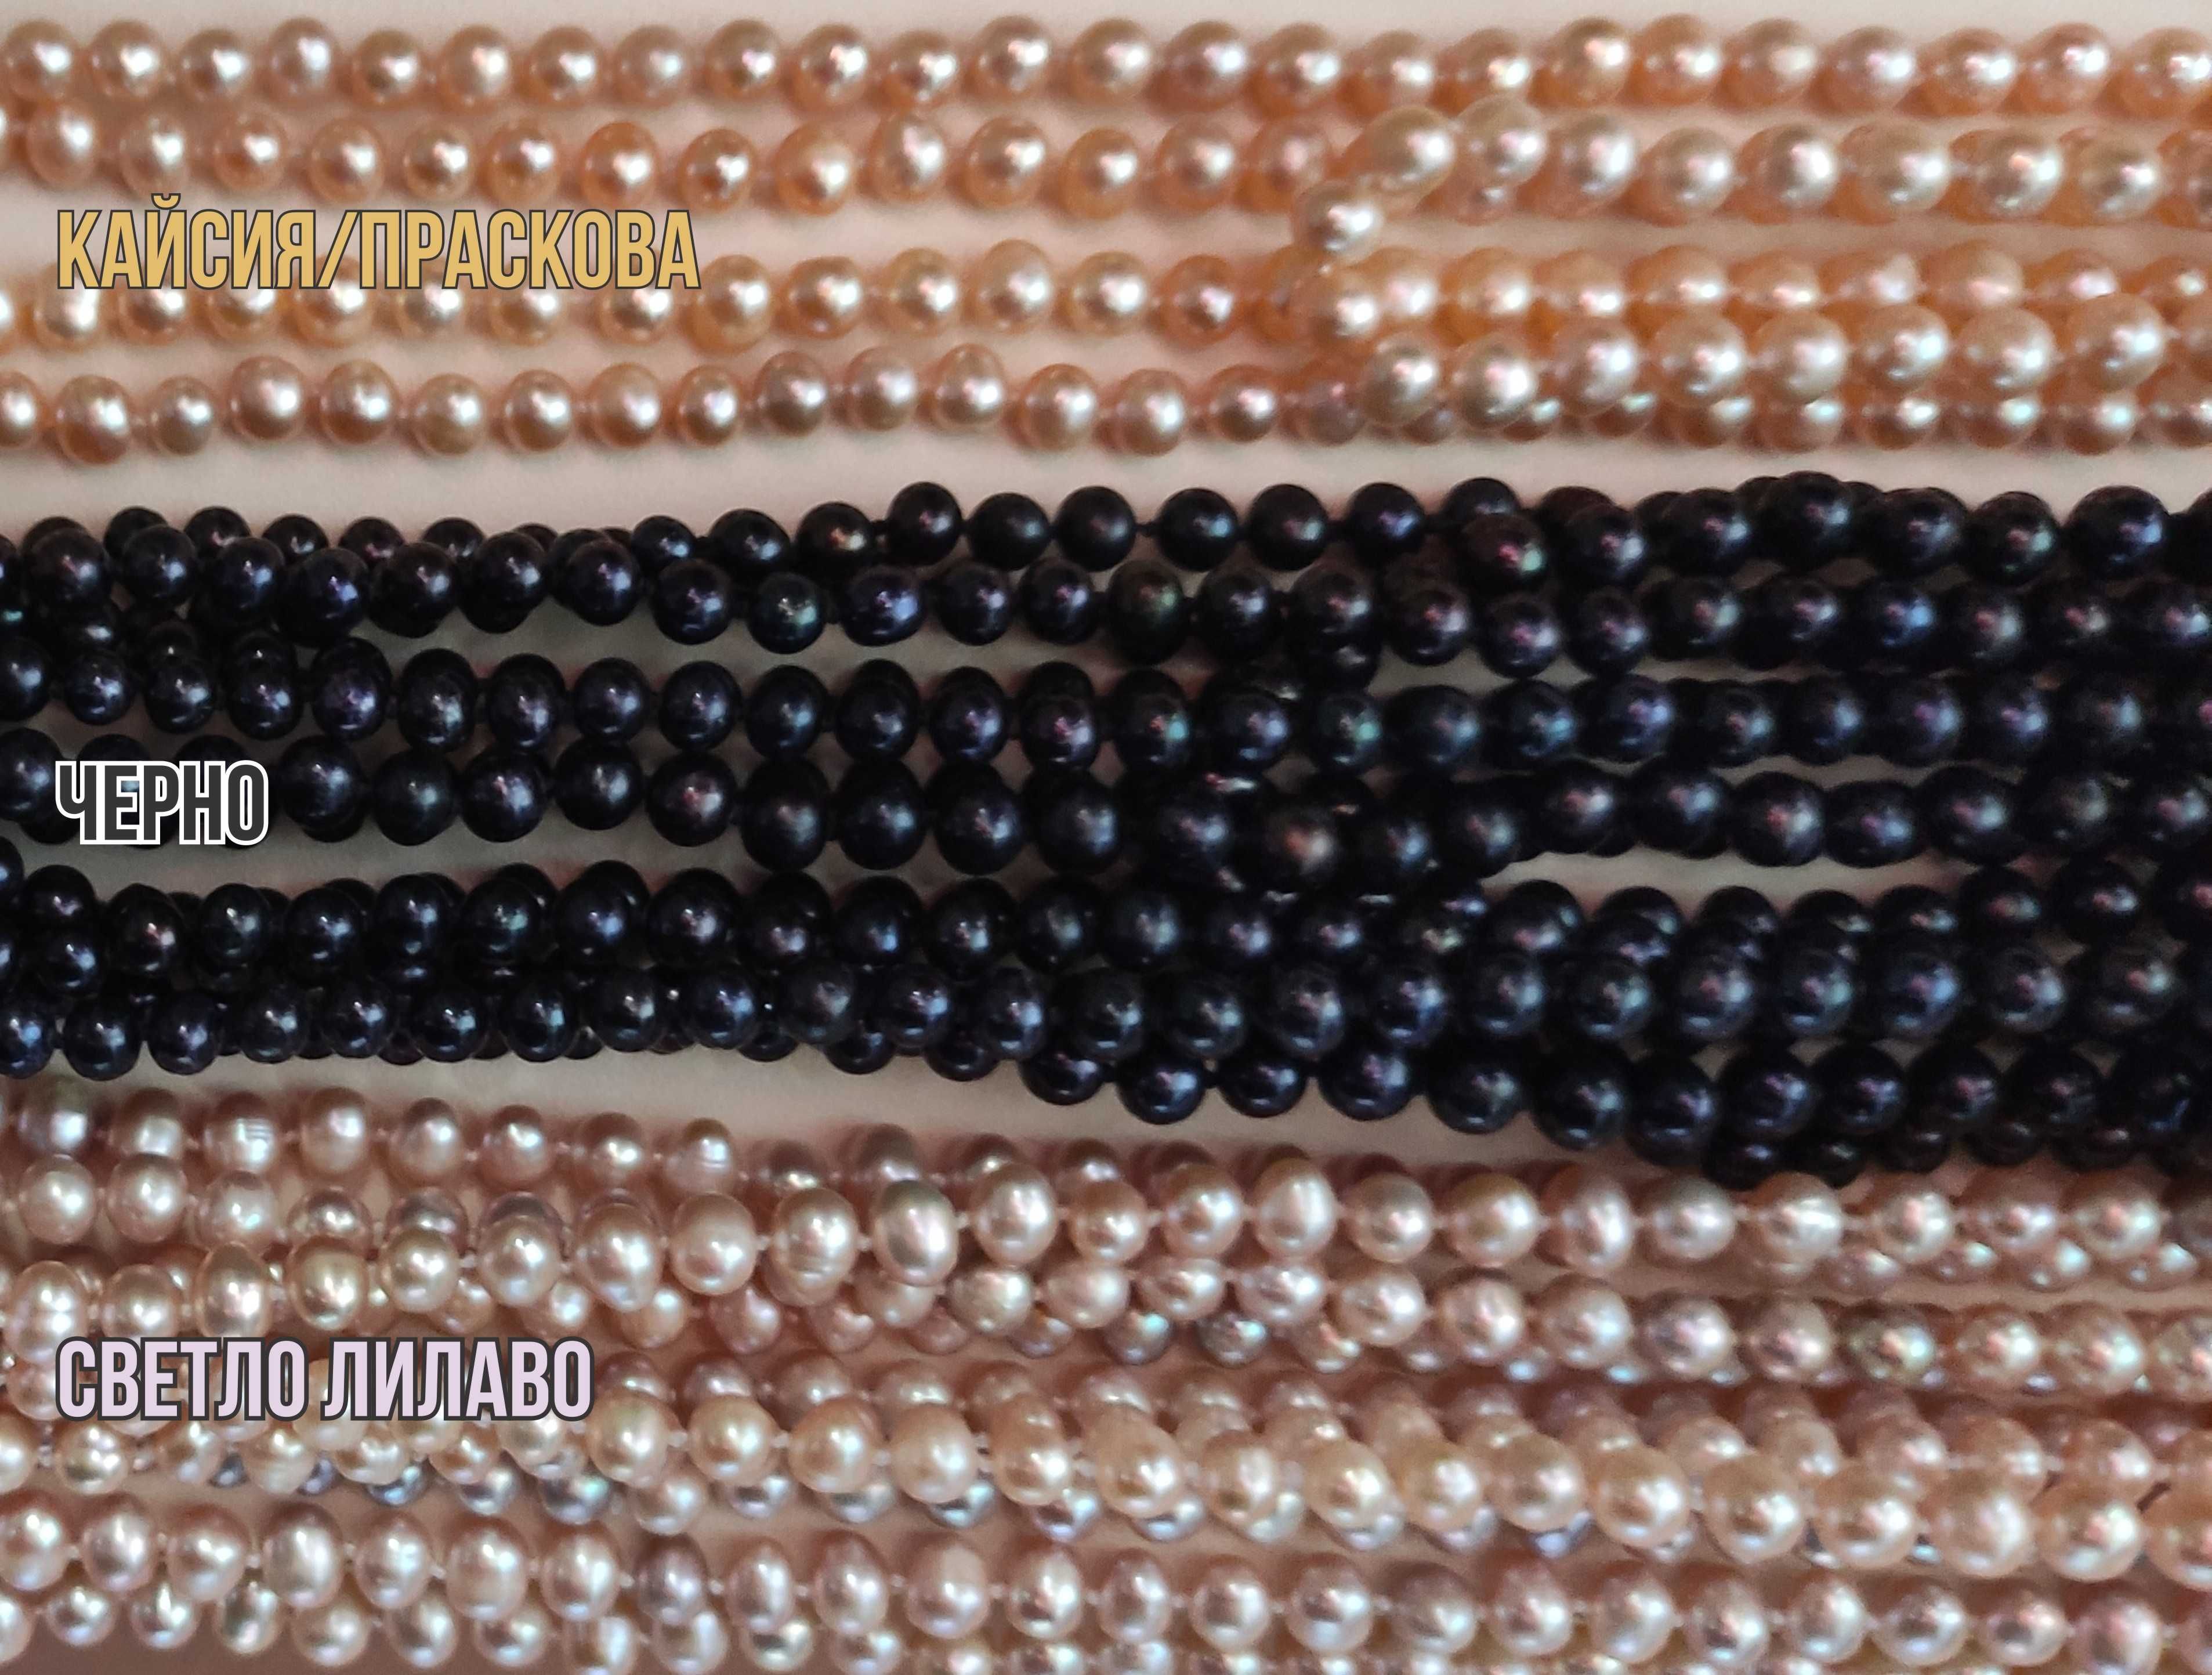 НОВИ! Естествени Перли Дълги Колиета 127 см, размер на перлата 6/7 мм